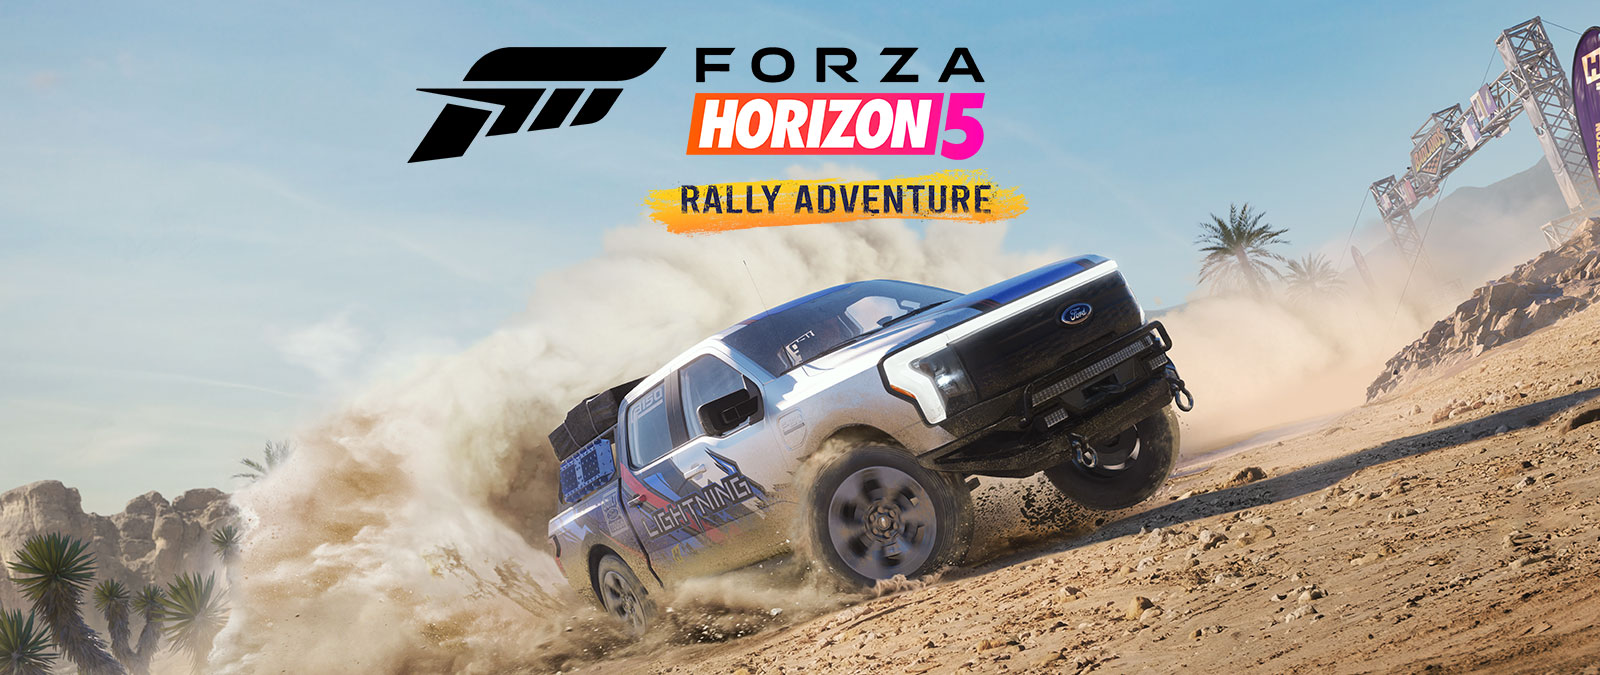 Forza Logo, Forza Horizon 5, Rally Adventure, a Ford 150 Lightning kicks up dust on a dirt track.